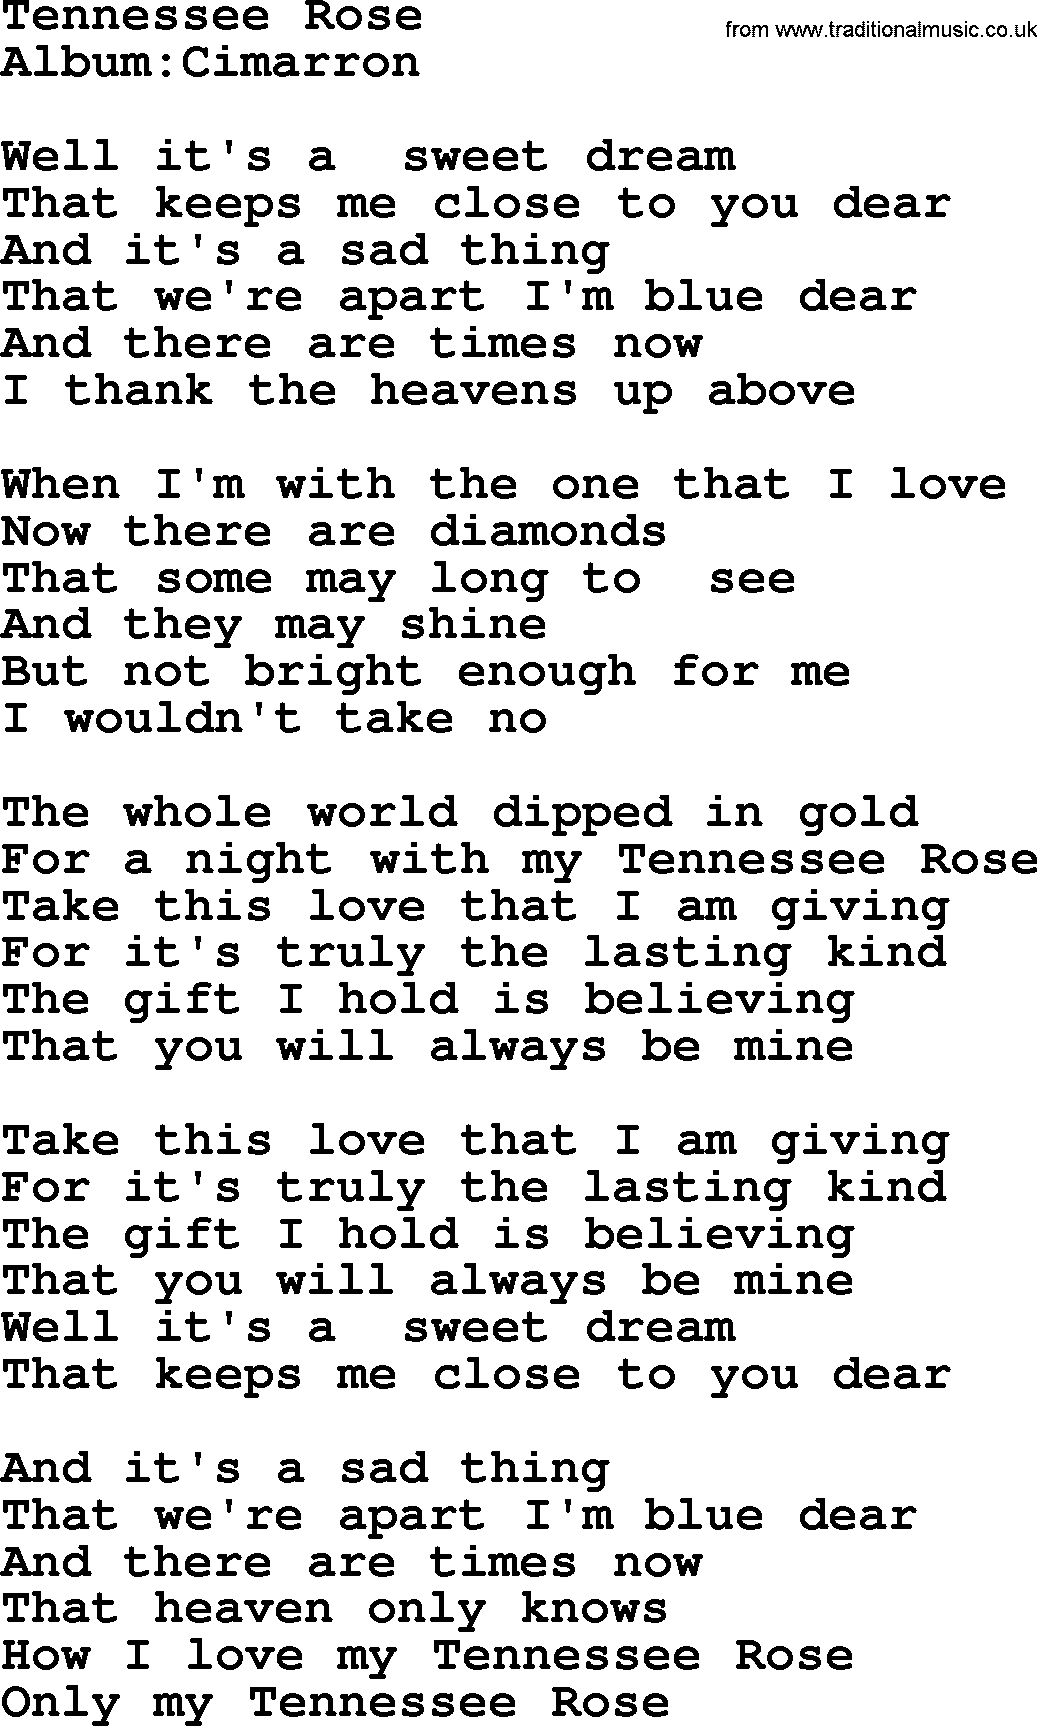 Emmylou Harris song: Tennessee Rose lyrics